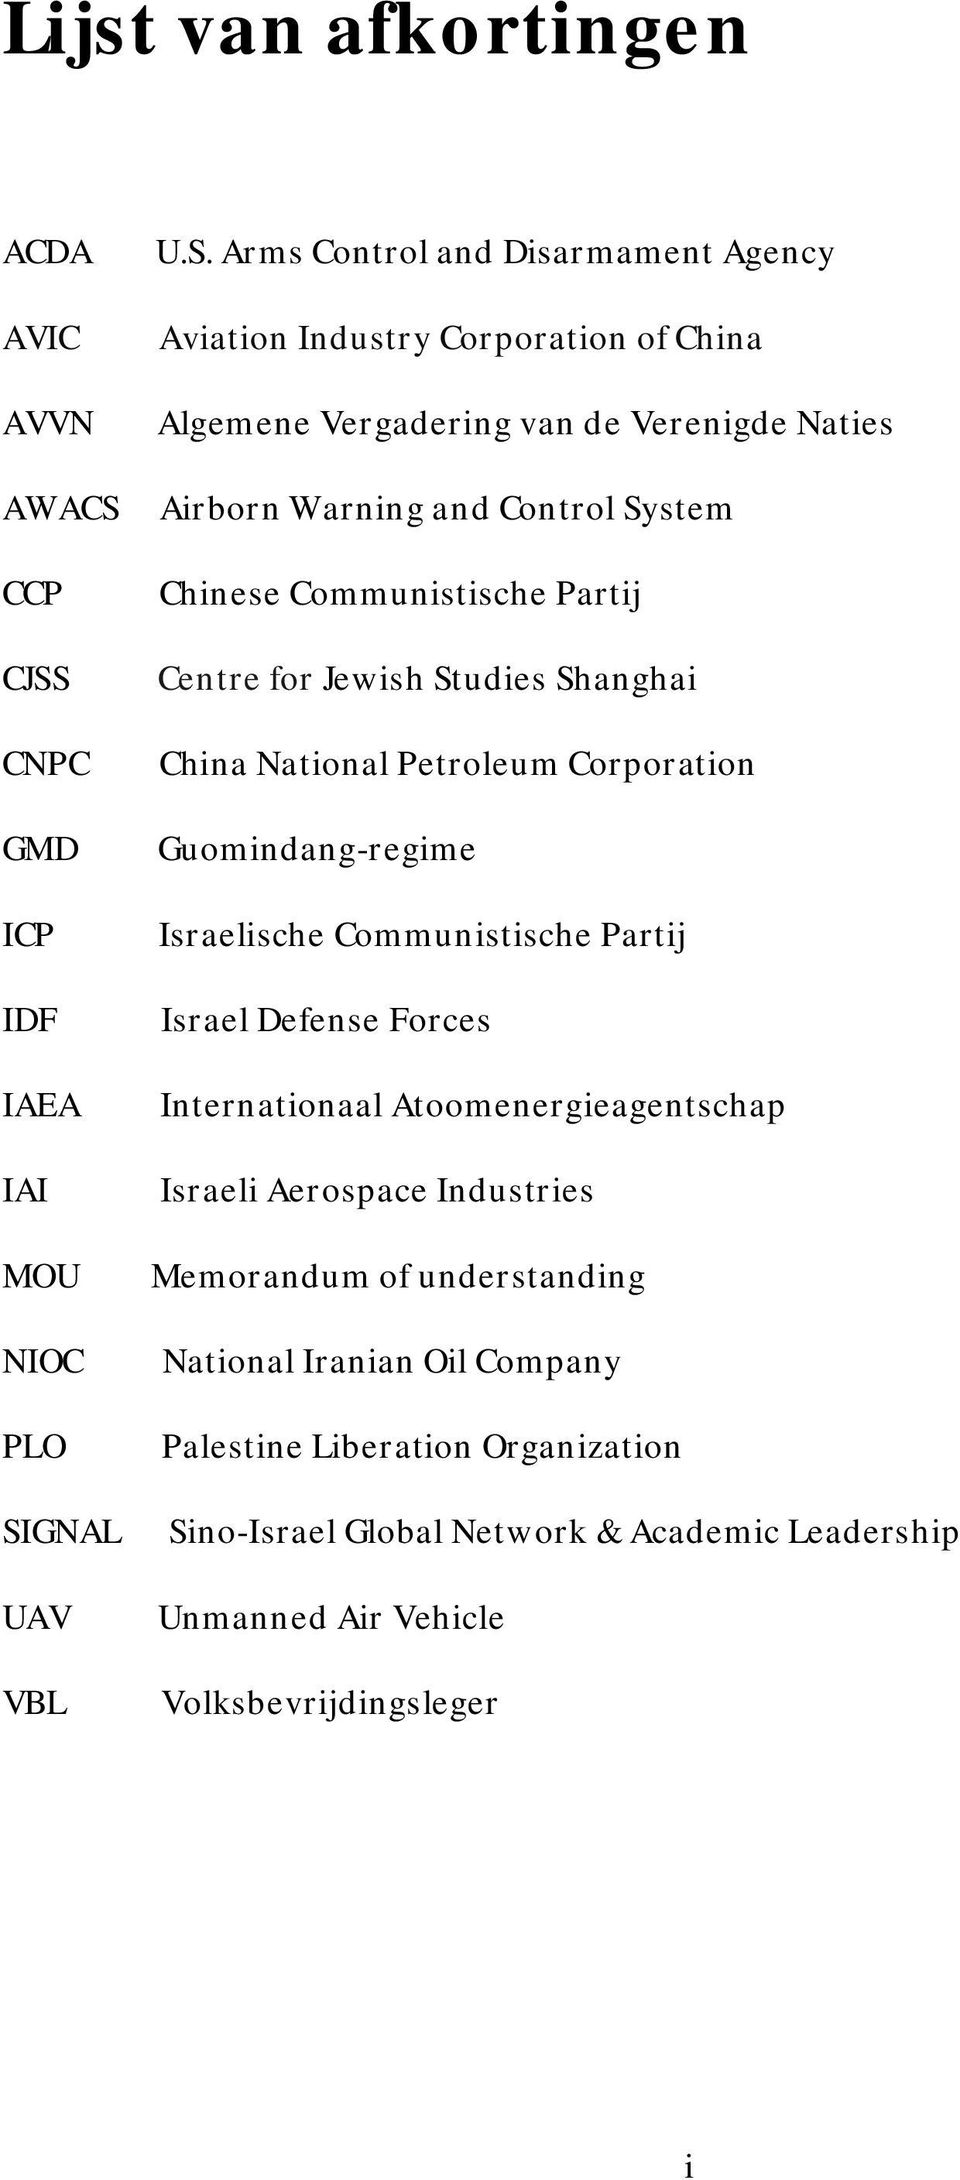 CNPC GMD ICP IDF IAEA IAI MOU NIOC PLO SIGNAL UAV VBL Chinese Communistische Partij Centre for Jewish Studies Shanghai China National Petroleum Corporation Guomindang-regime